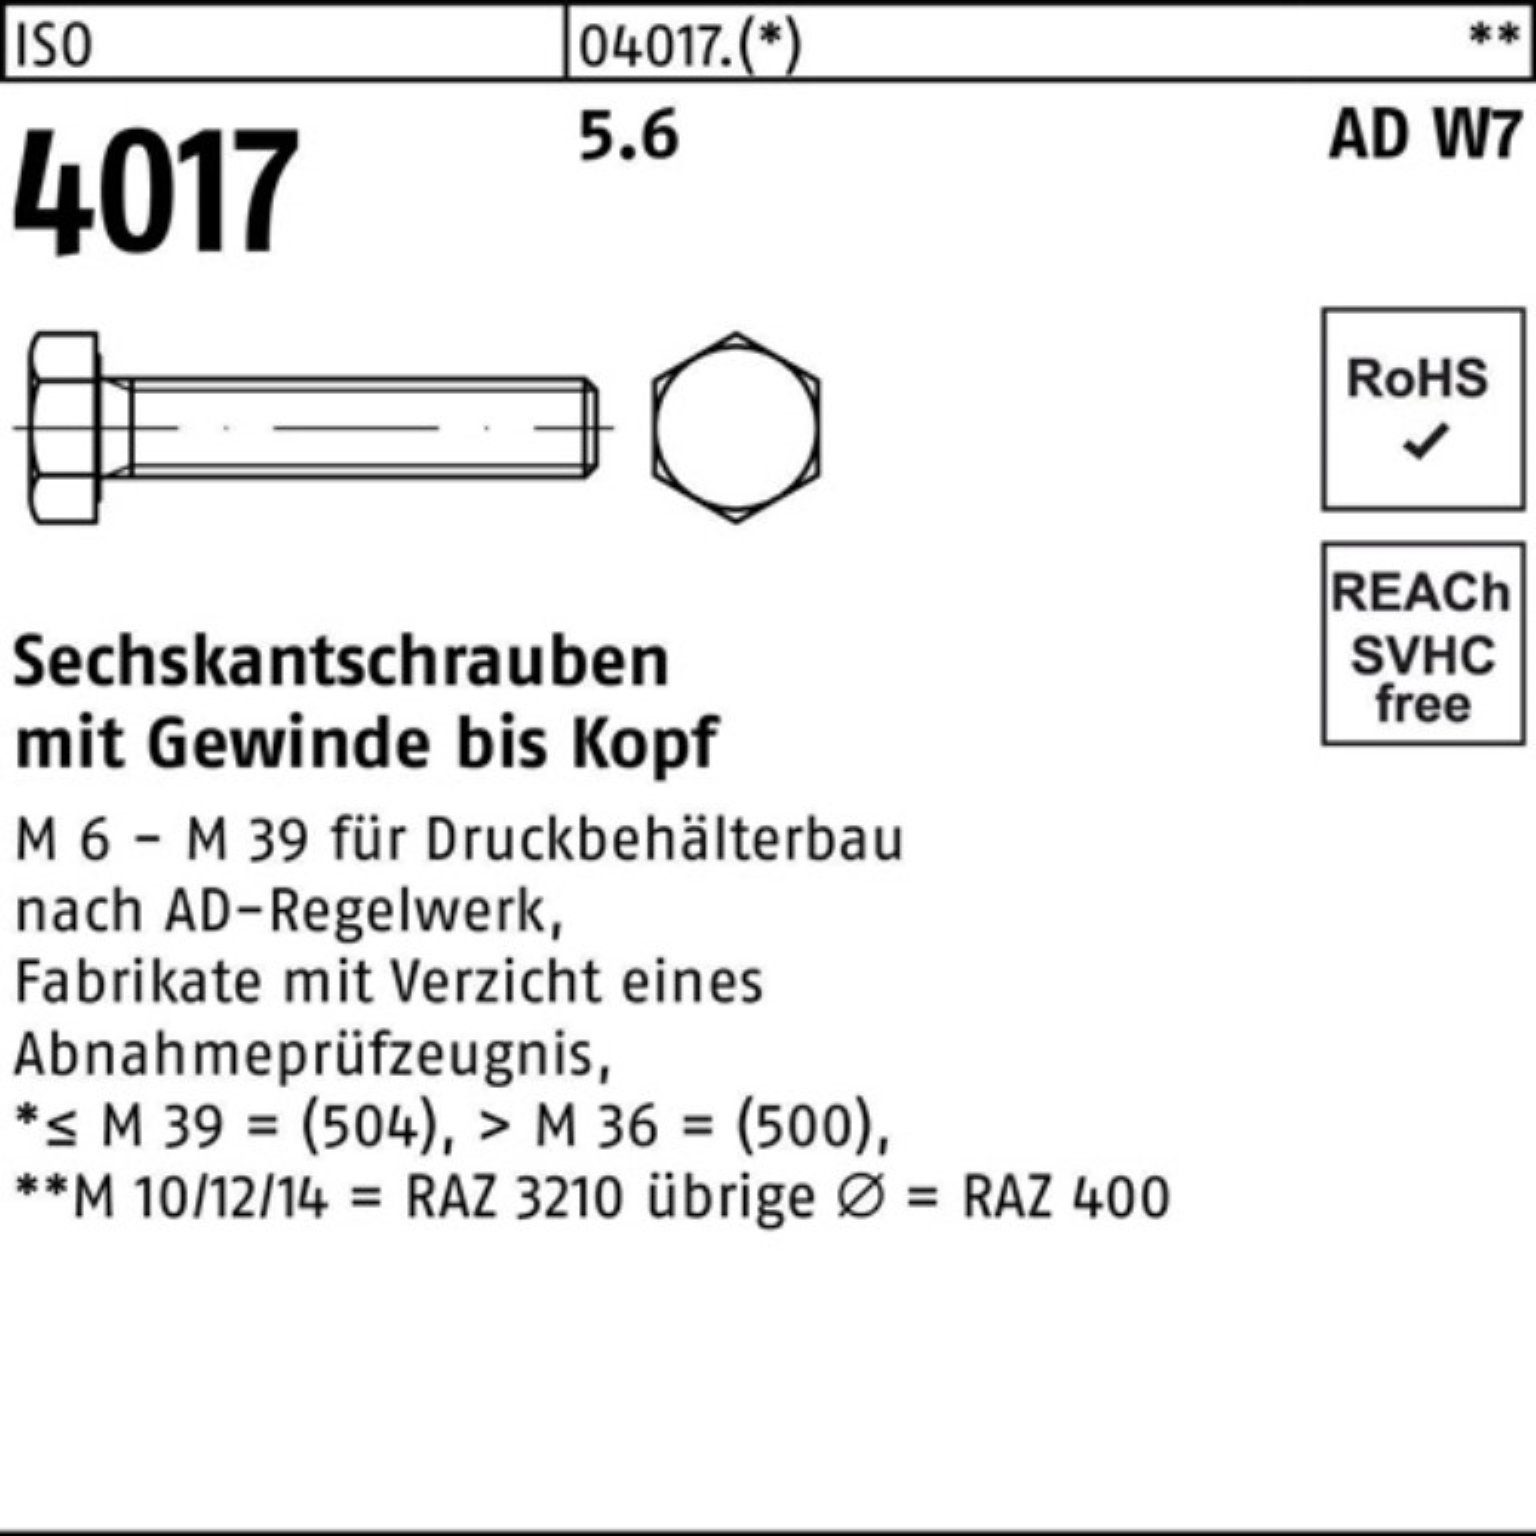 Pack VG W7 Bufab Sechskantschraube ISO 30 25 Sechskantschraube 100er I Stück M20x 5.6 4017 AD